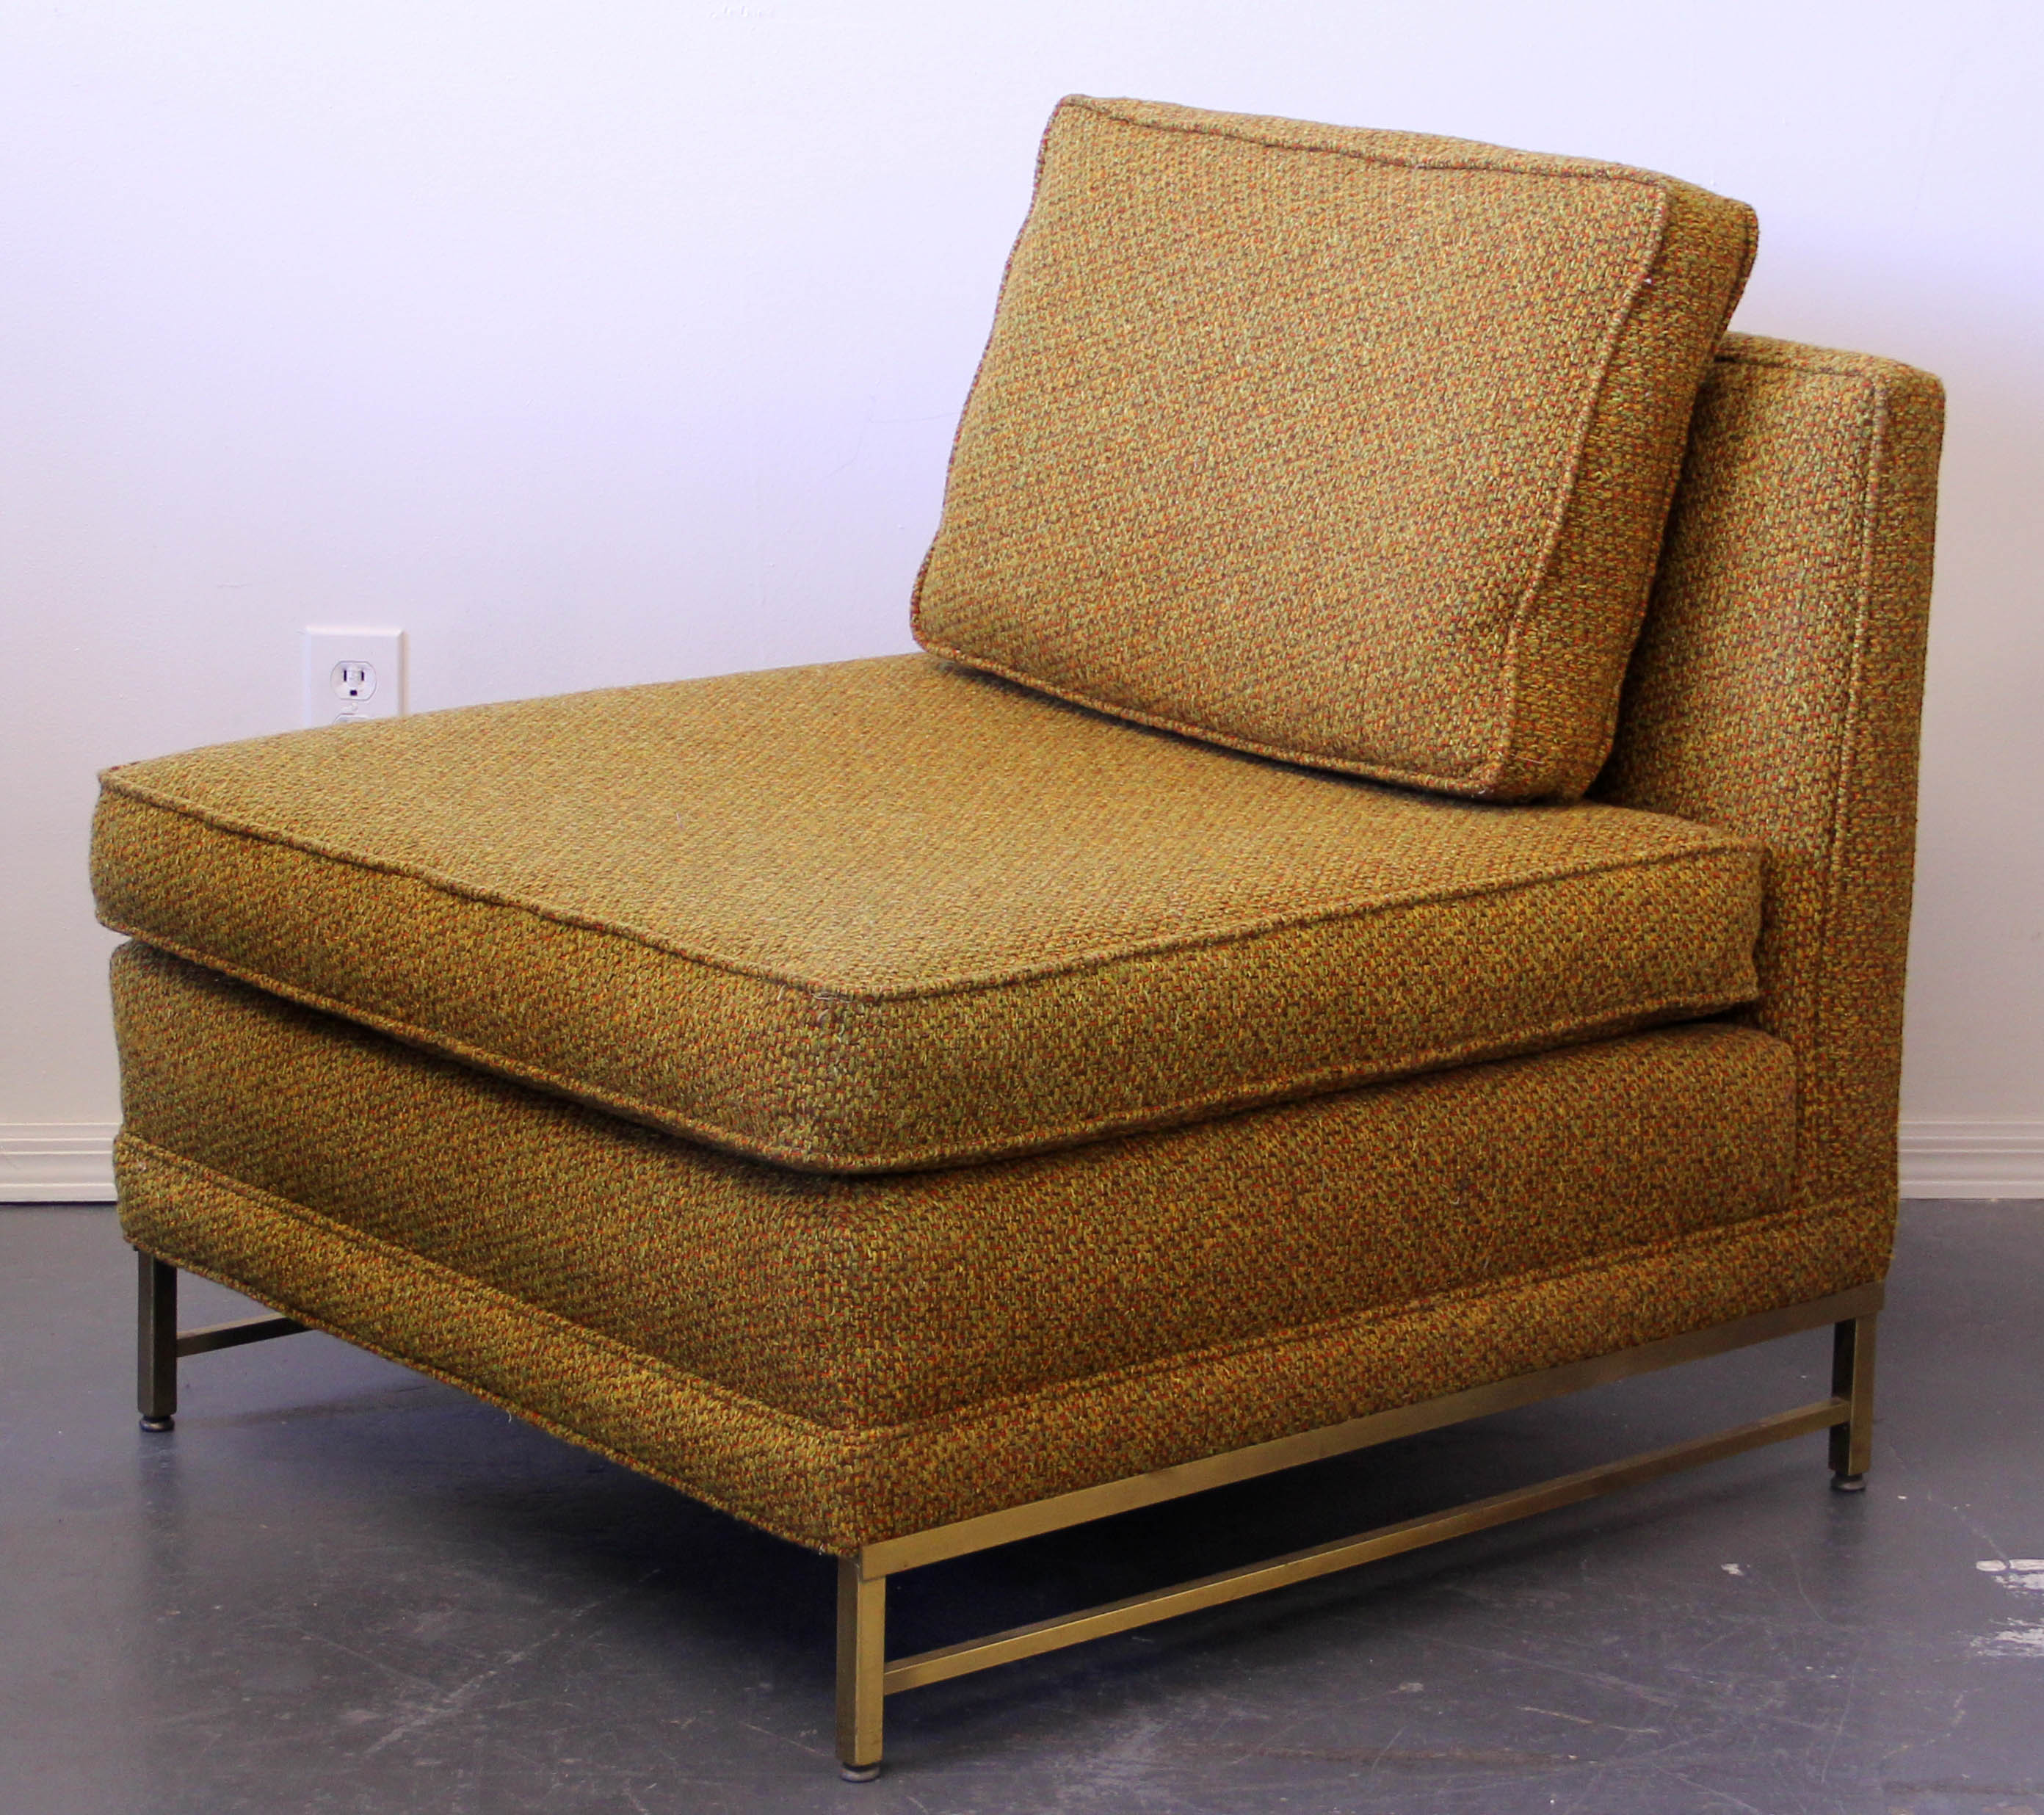 Paul McCobb Directional Designs Lounge Chair